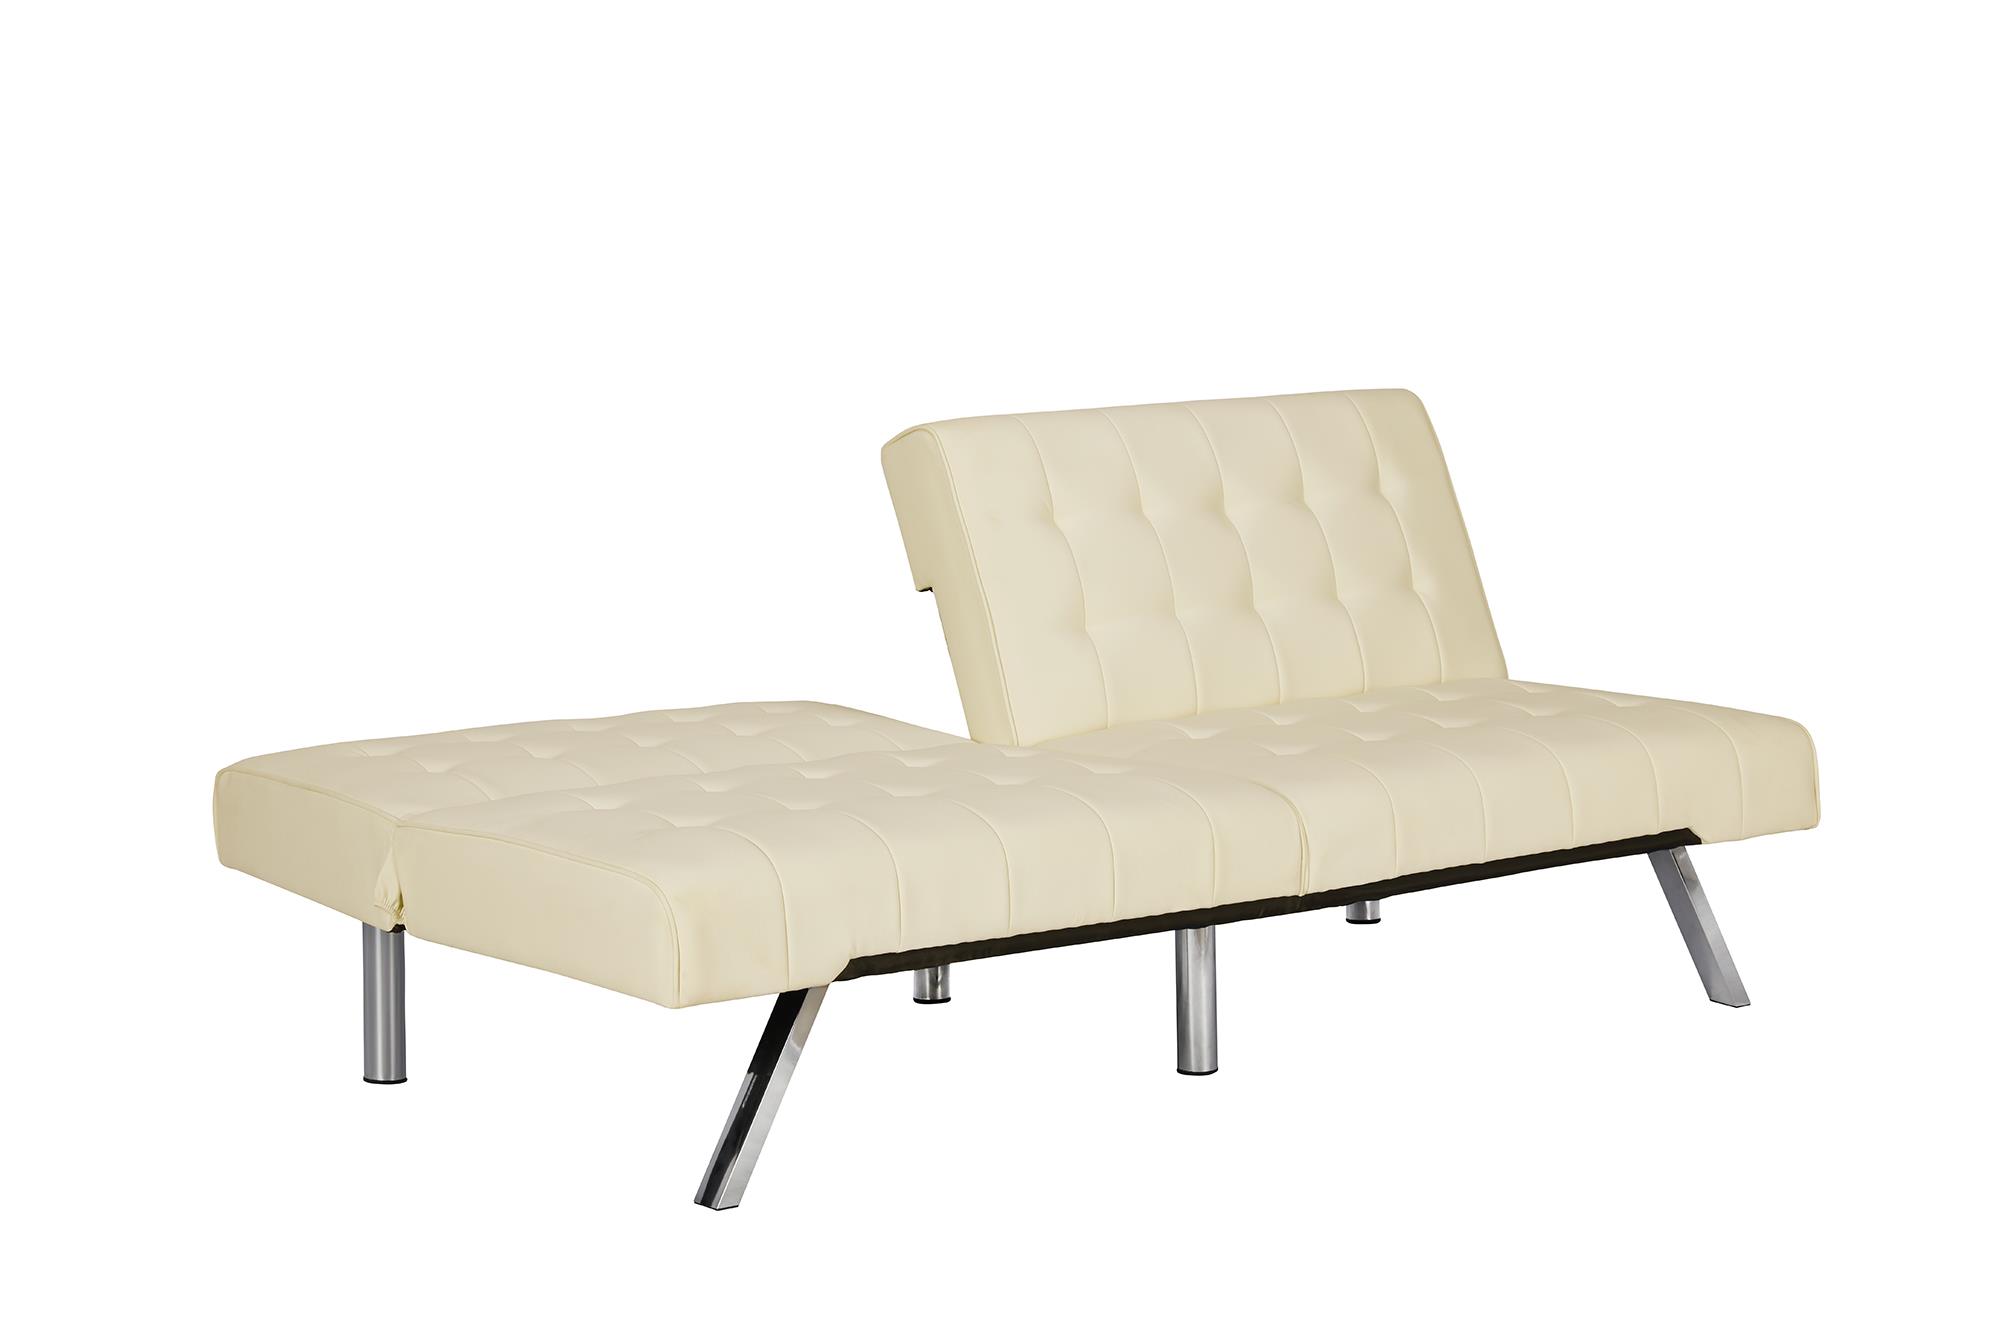 DHP Emily Convertible Tufted Futon Sofa, Vanilla Faux Leather - image 5 of 21